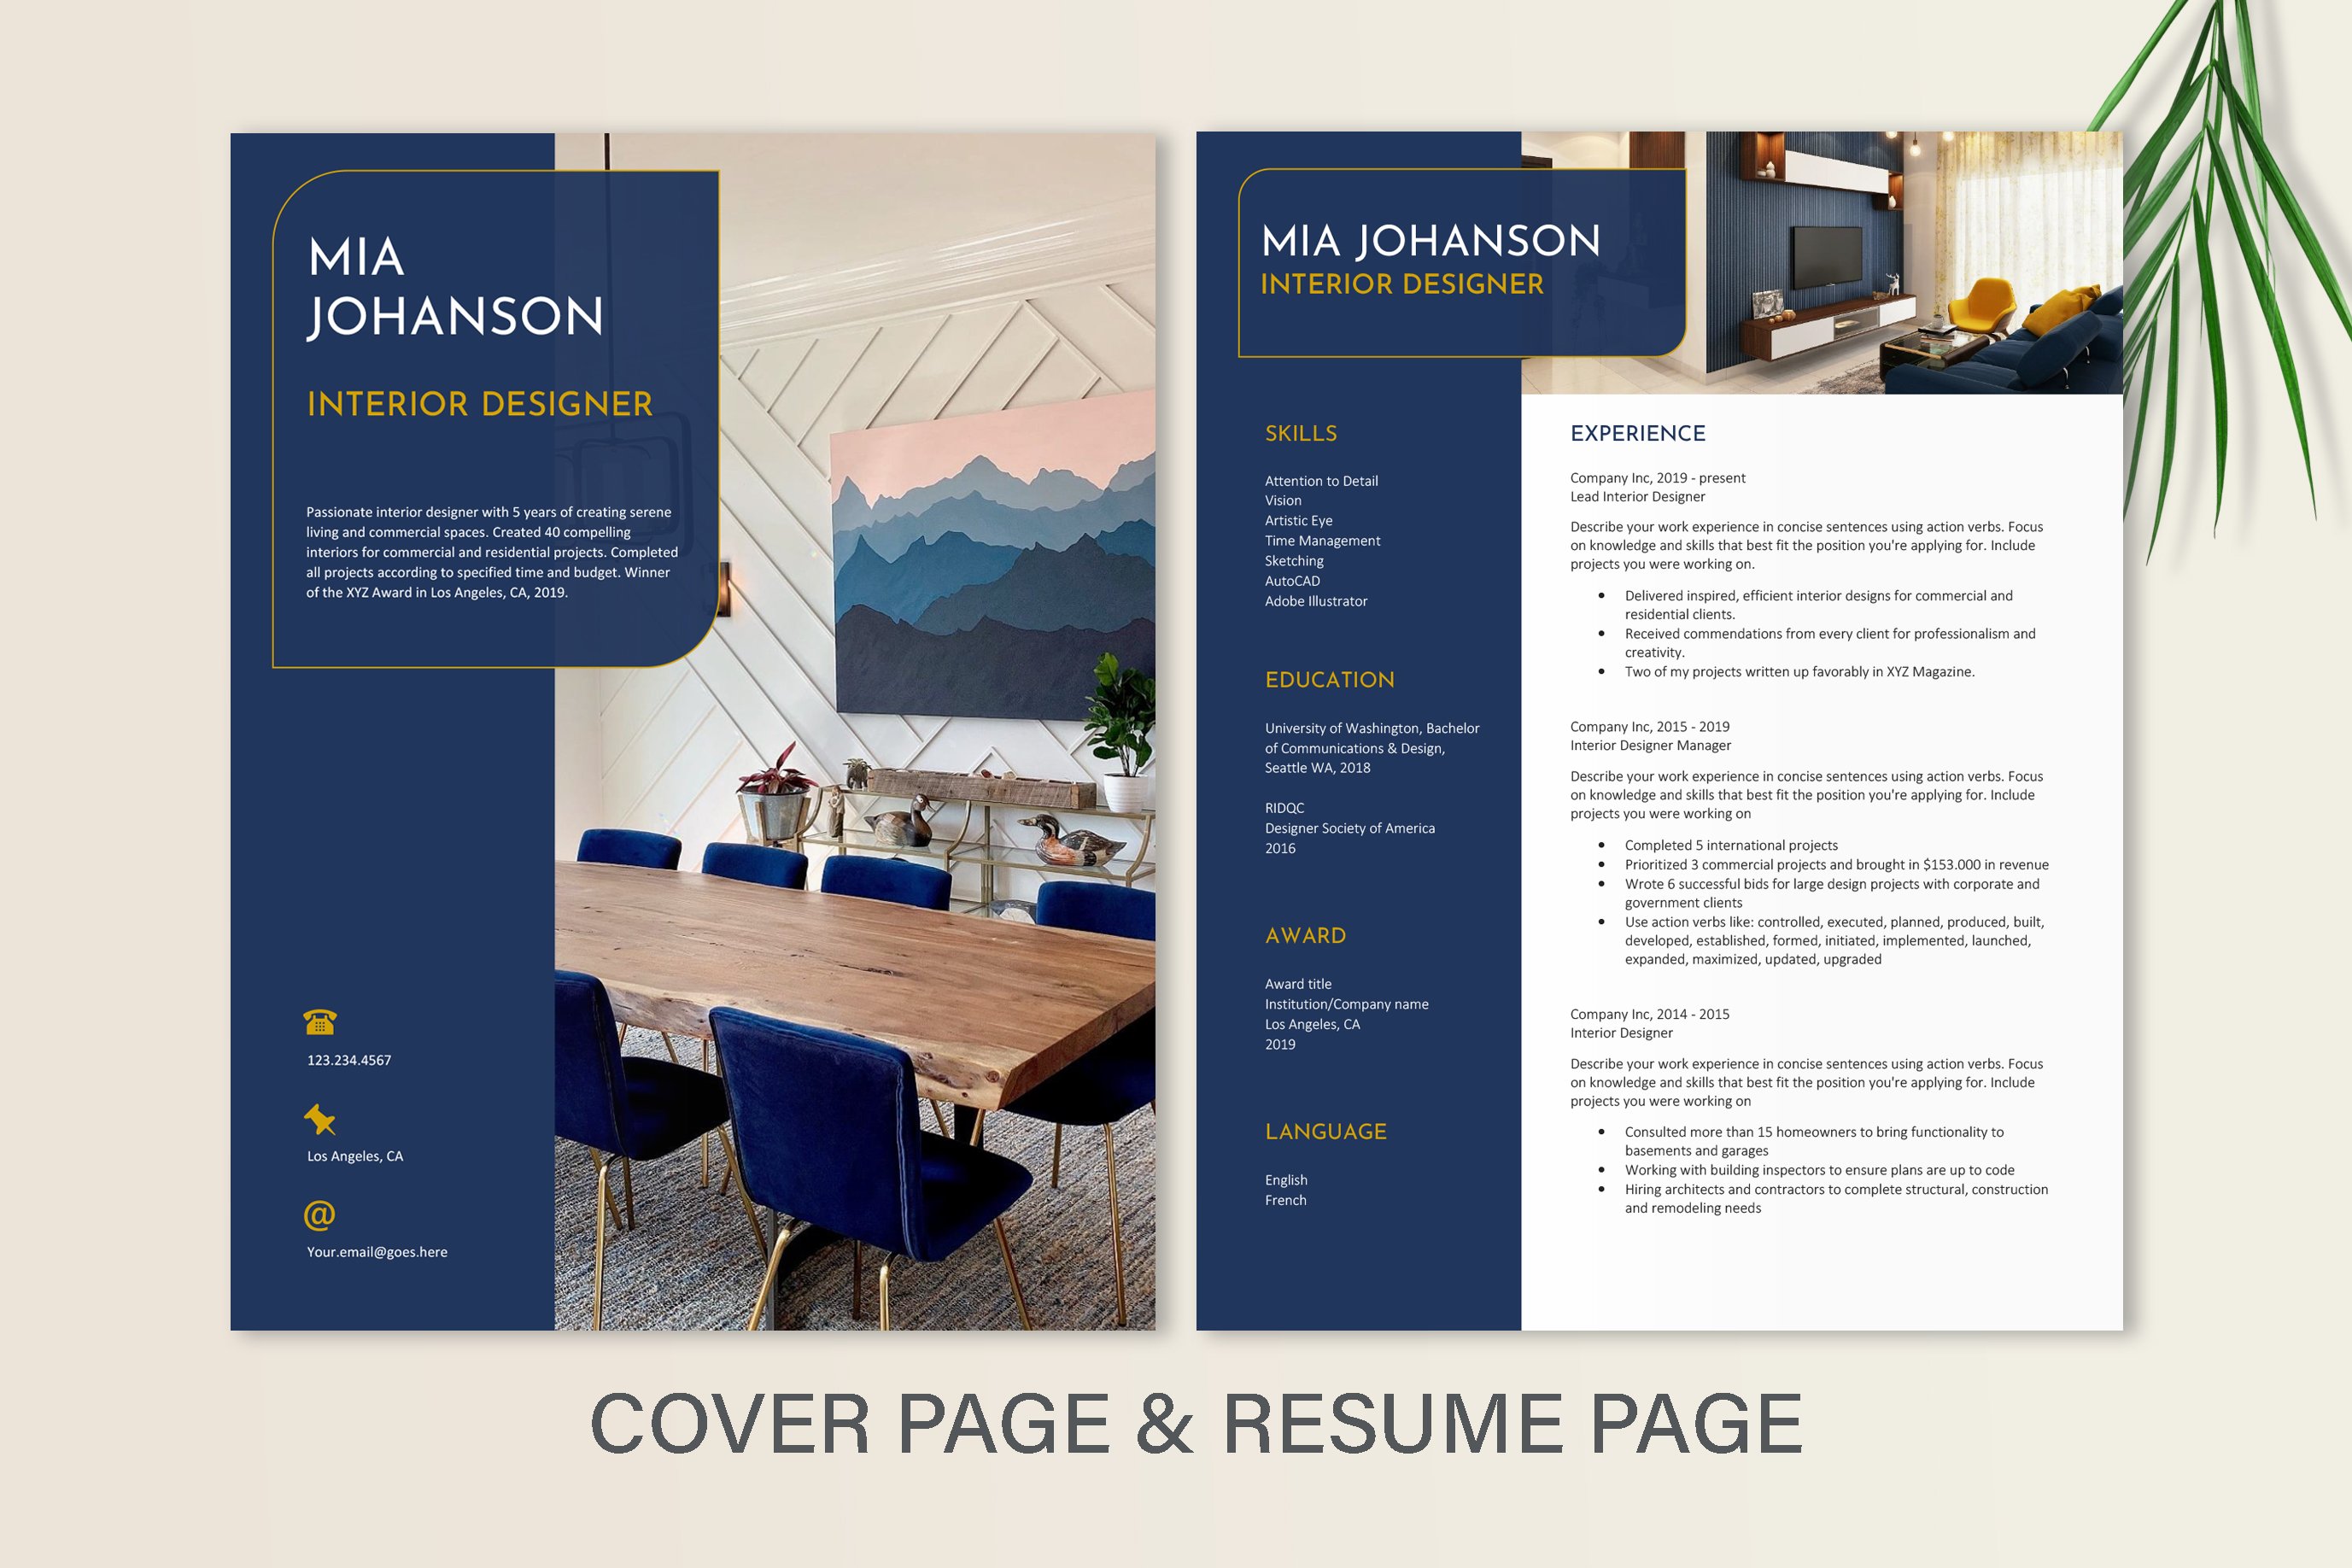 Interior designer resume portfolio preview image.